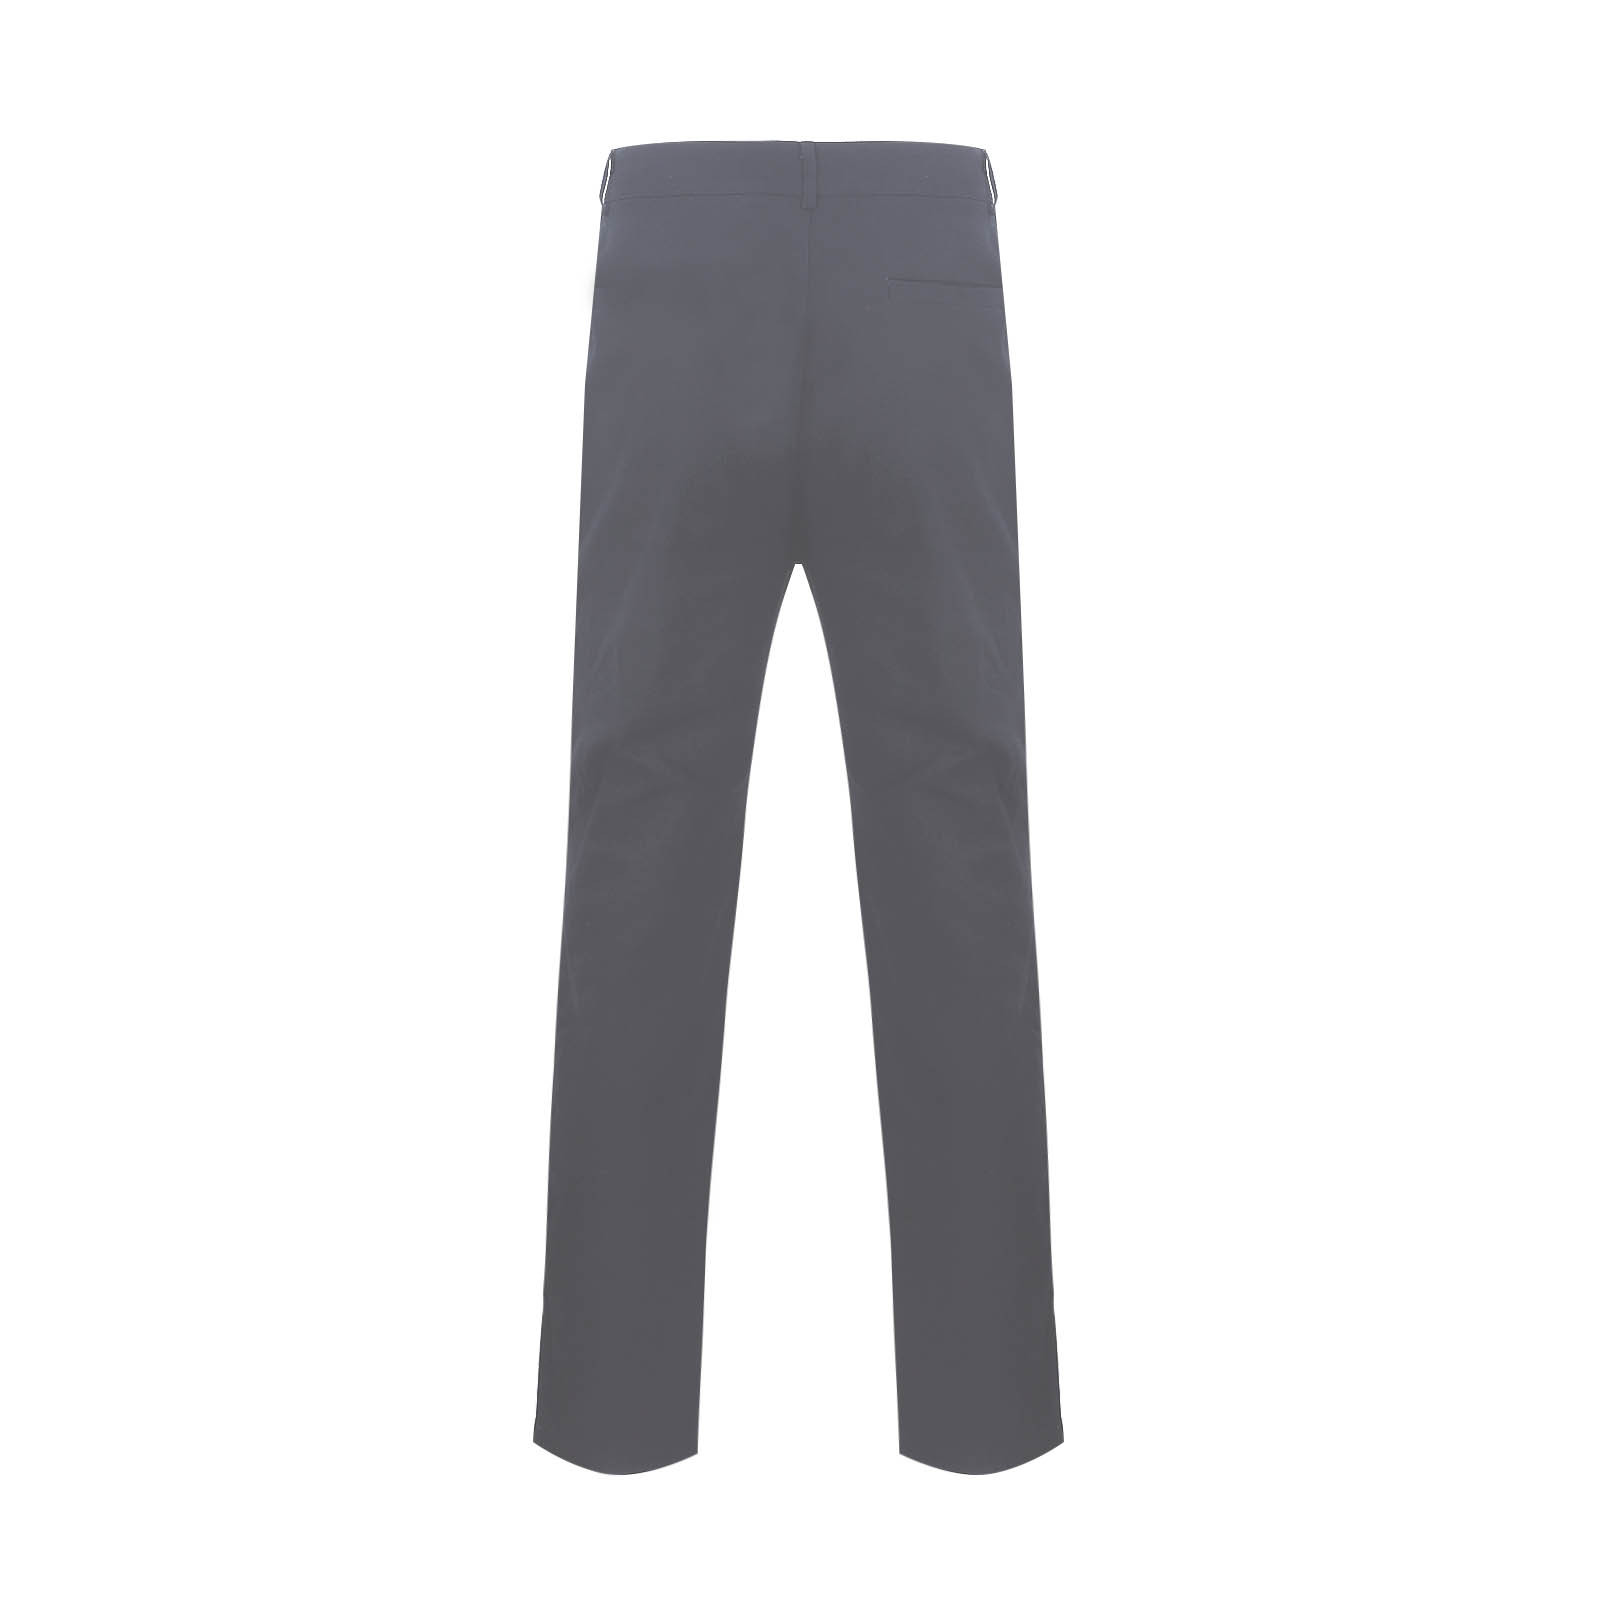 AdBFJAF Pants for Men Sweatpants Men's New Pure Color Casual Slim Feet ...